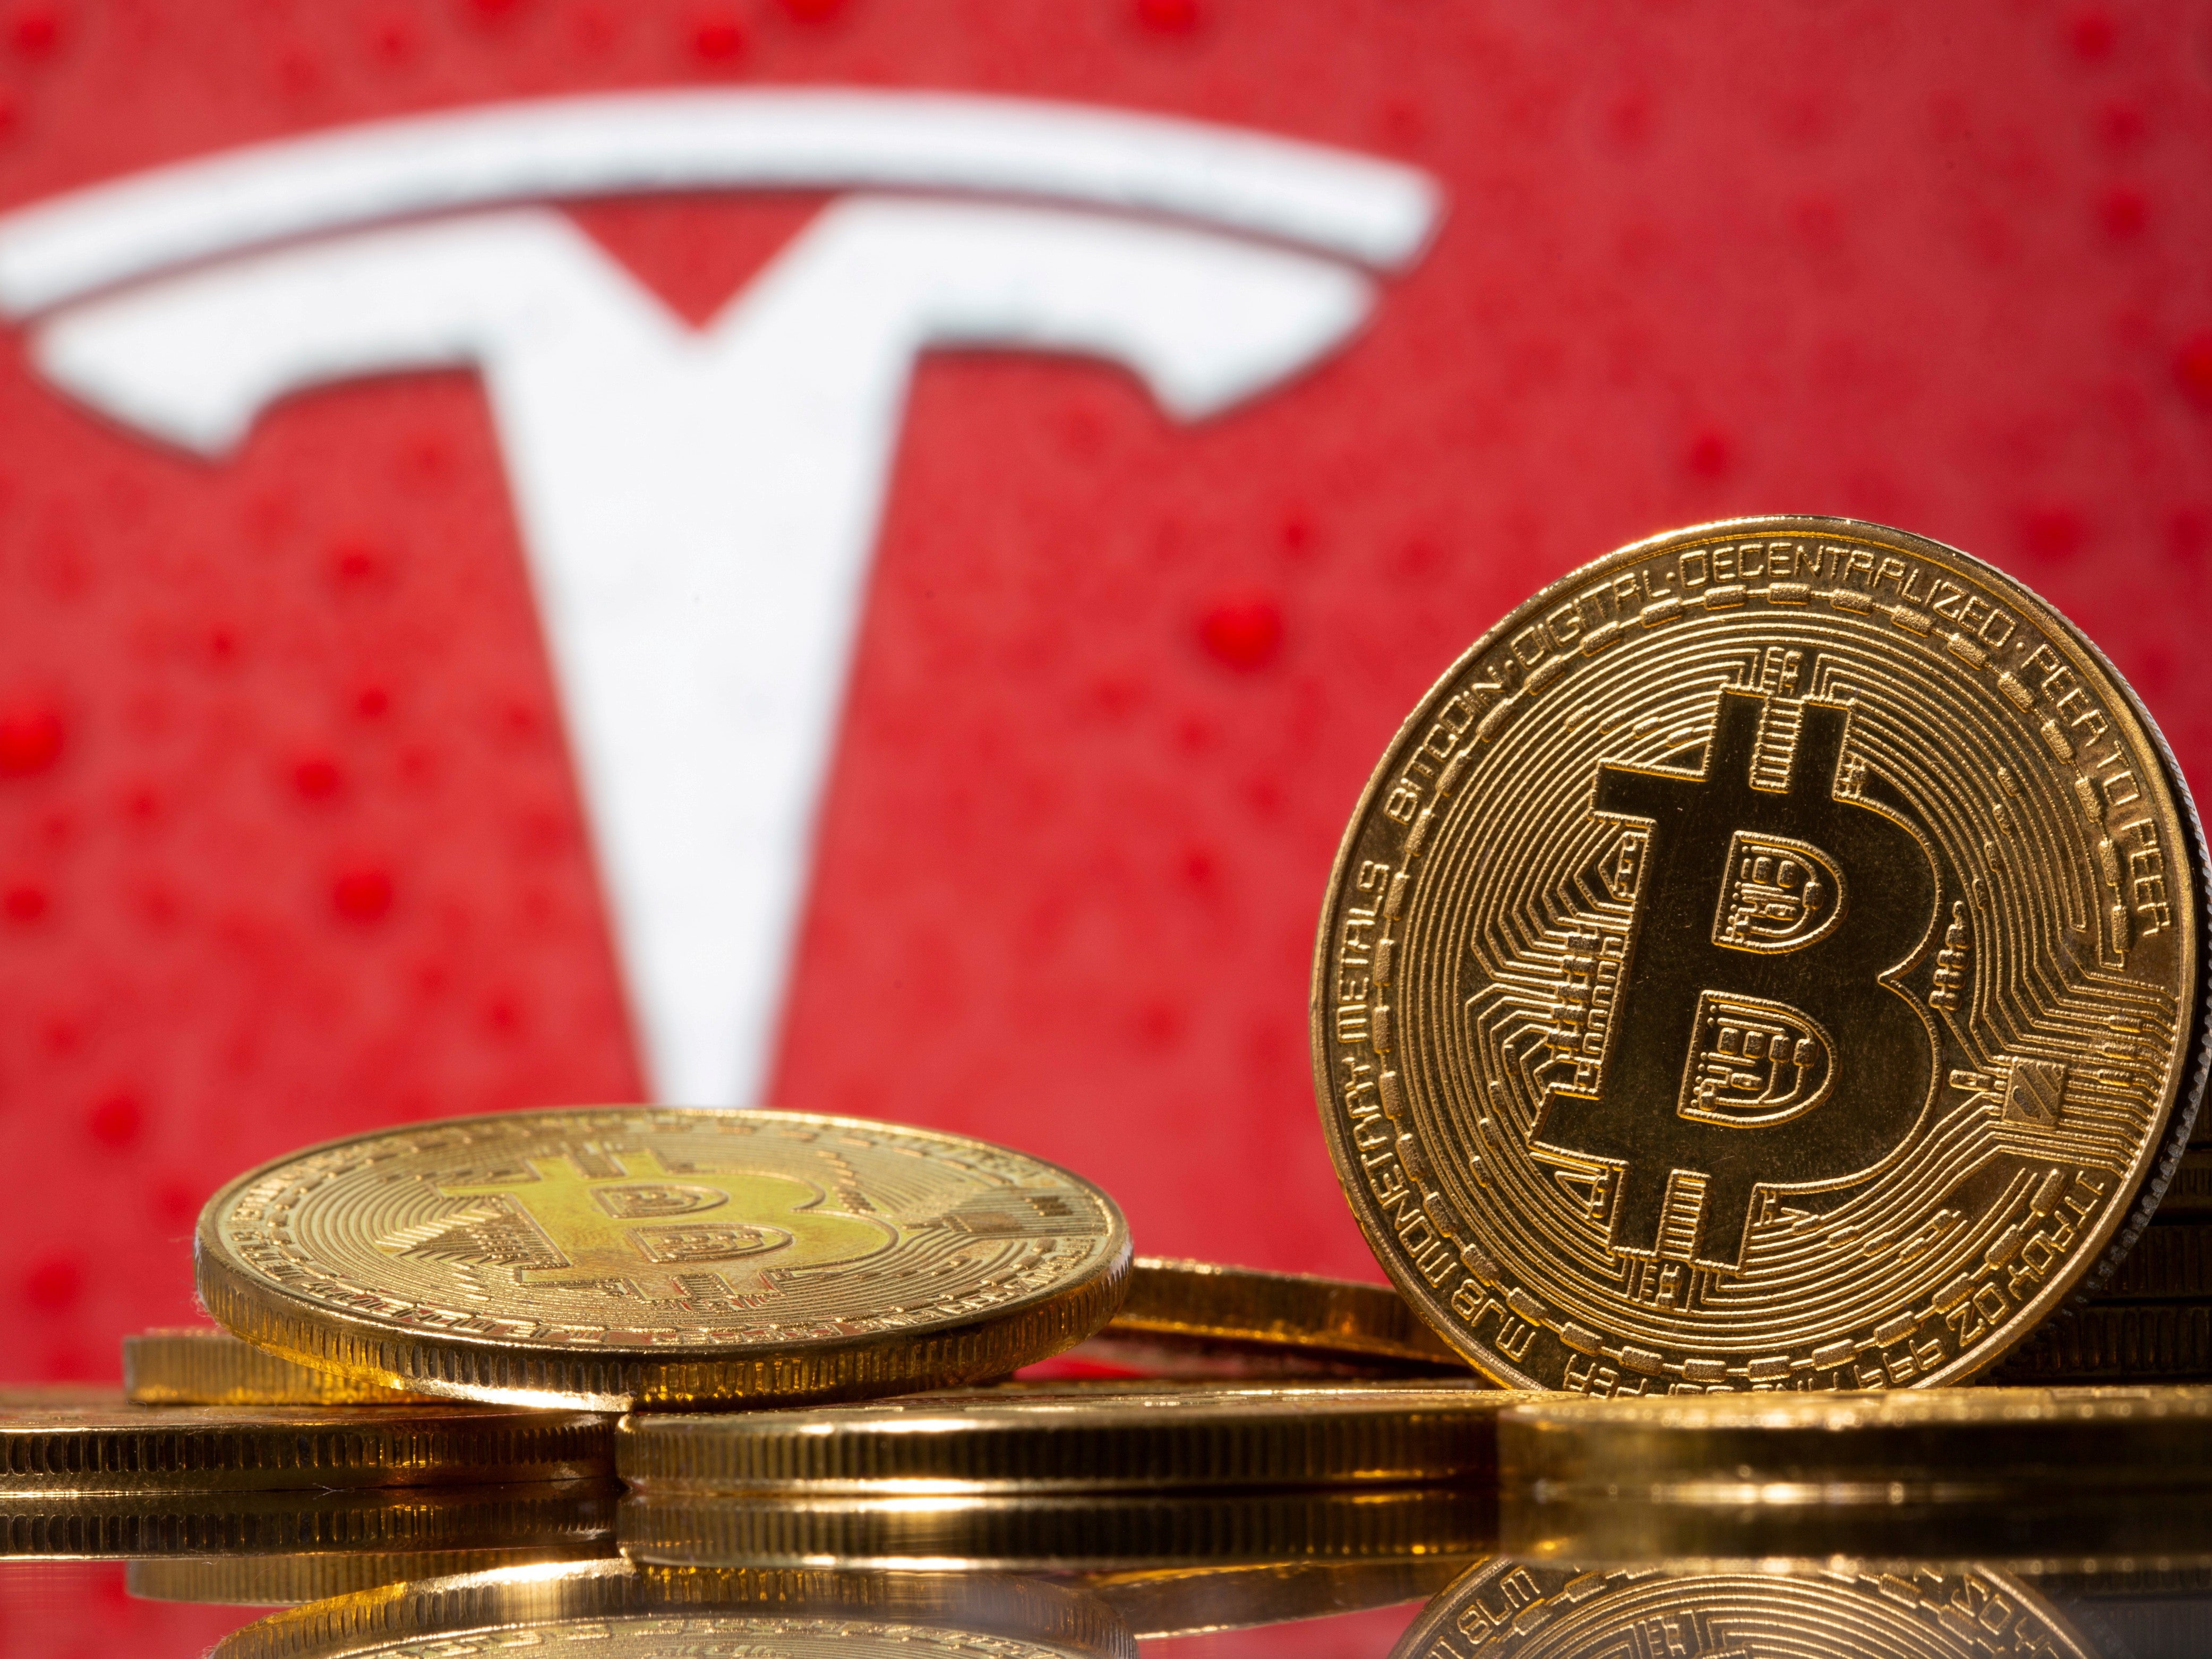 Tesla invested $1.5 billion in bitcoin in January 2021